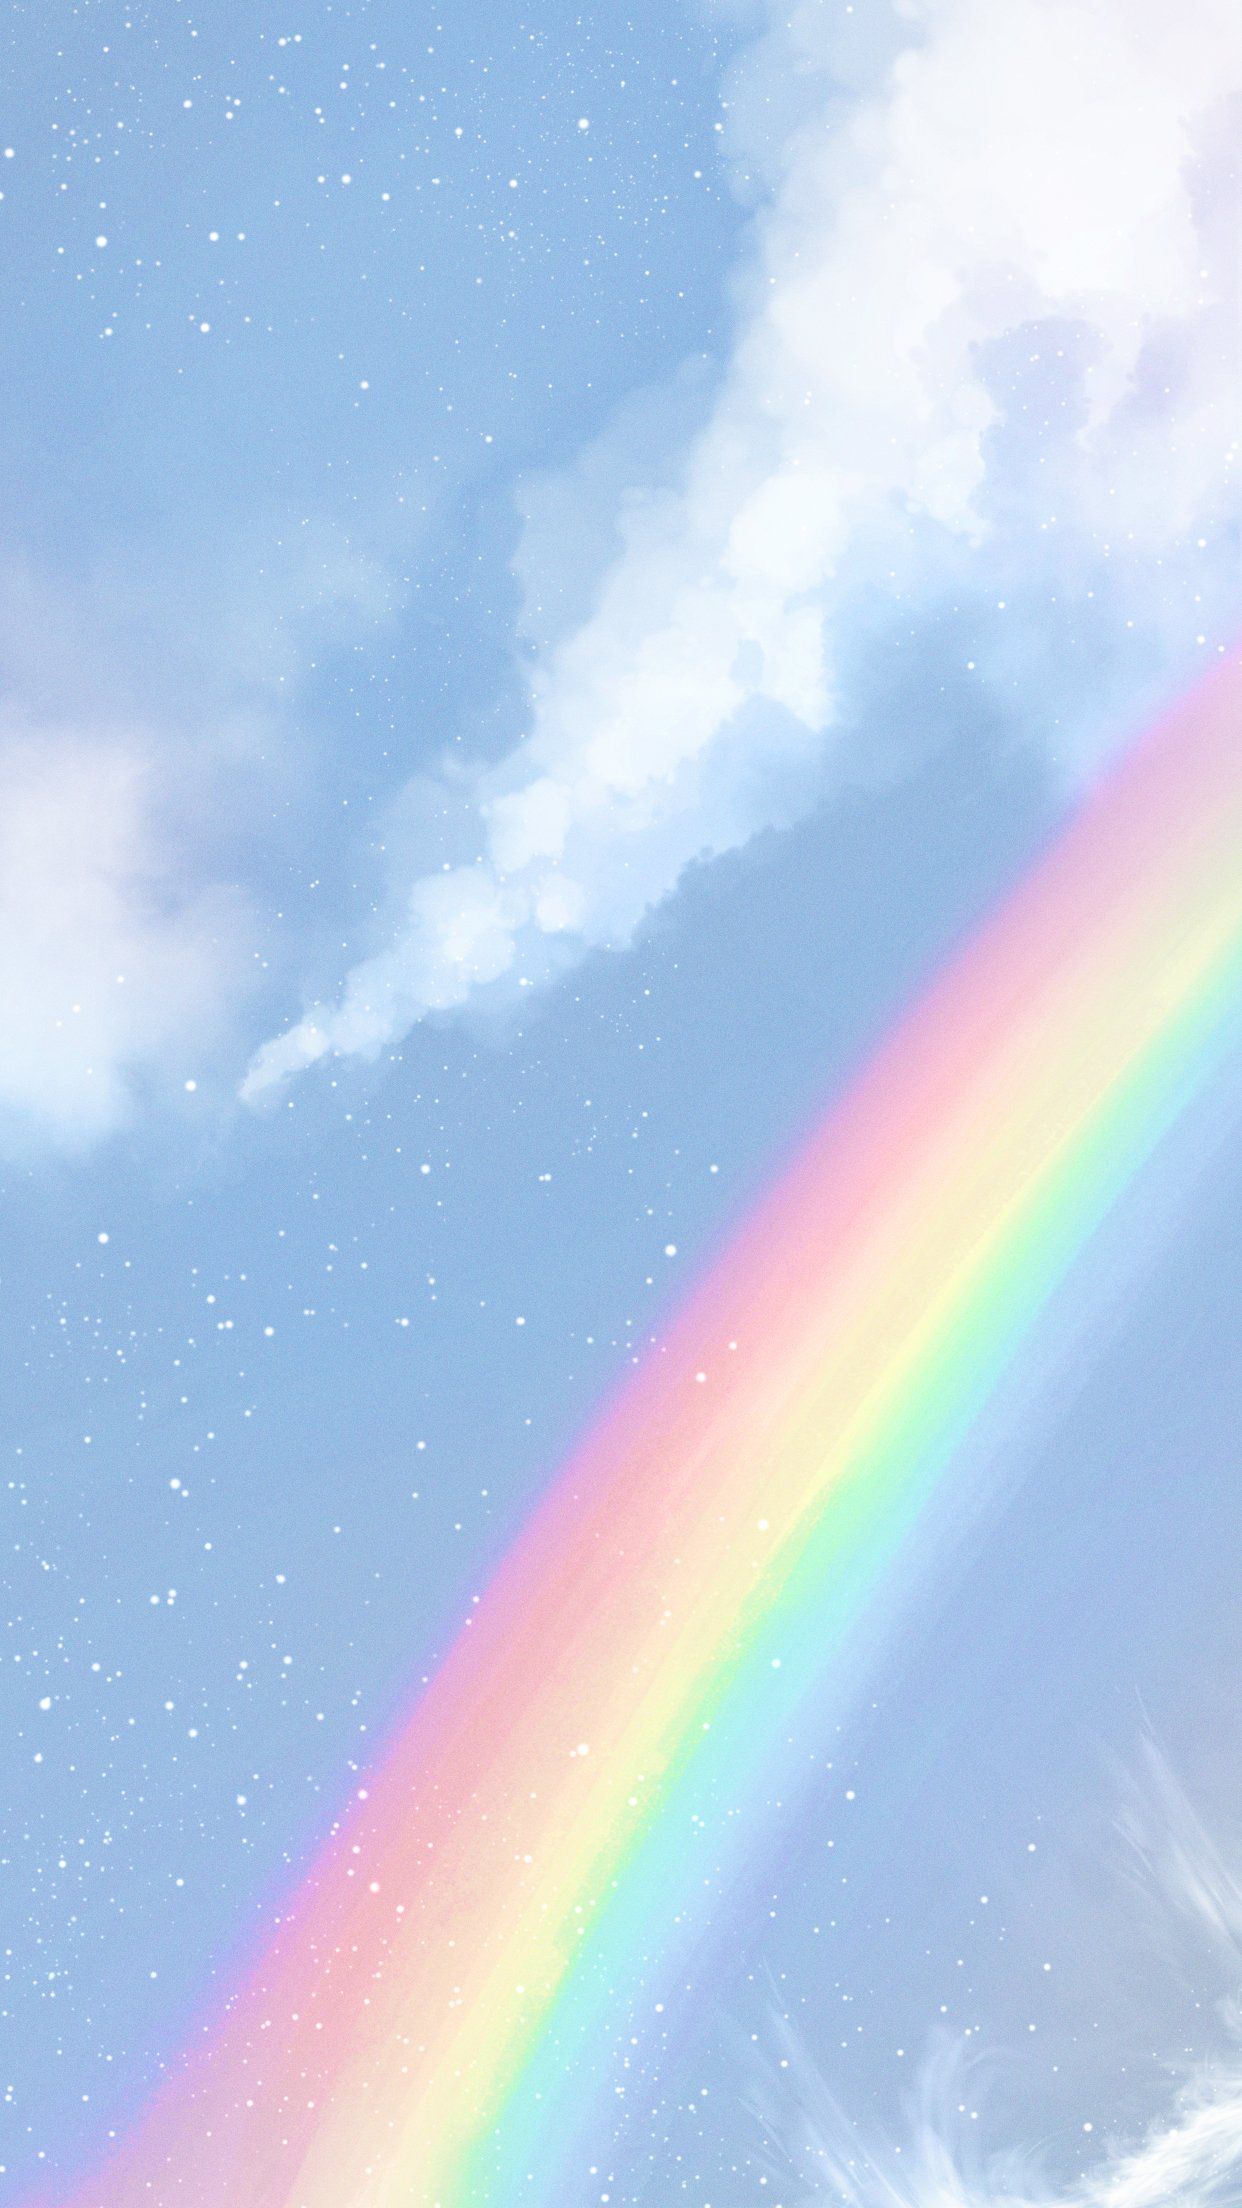 A rainbow in the sky - Pastel rainbow, pride